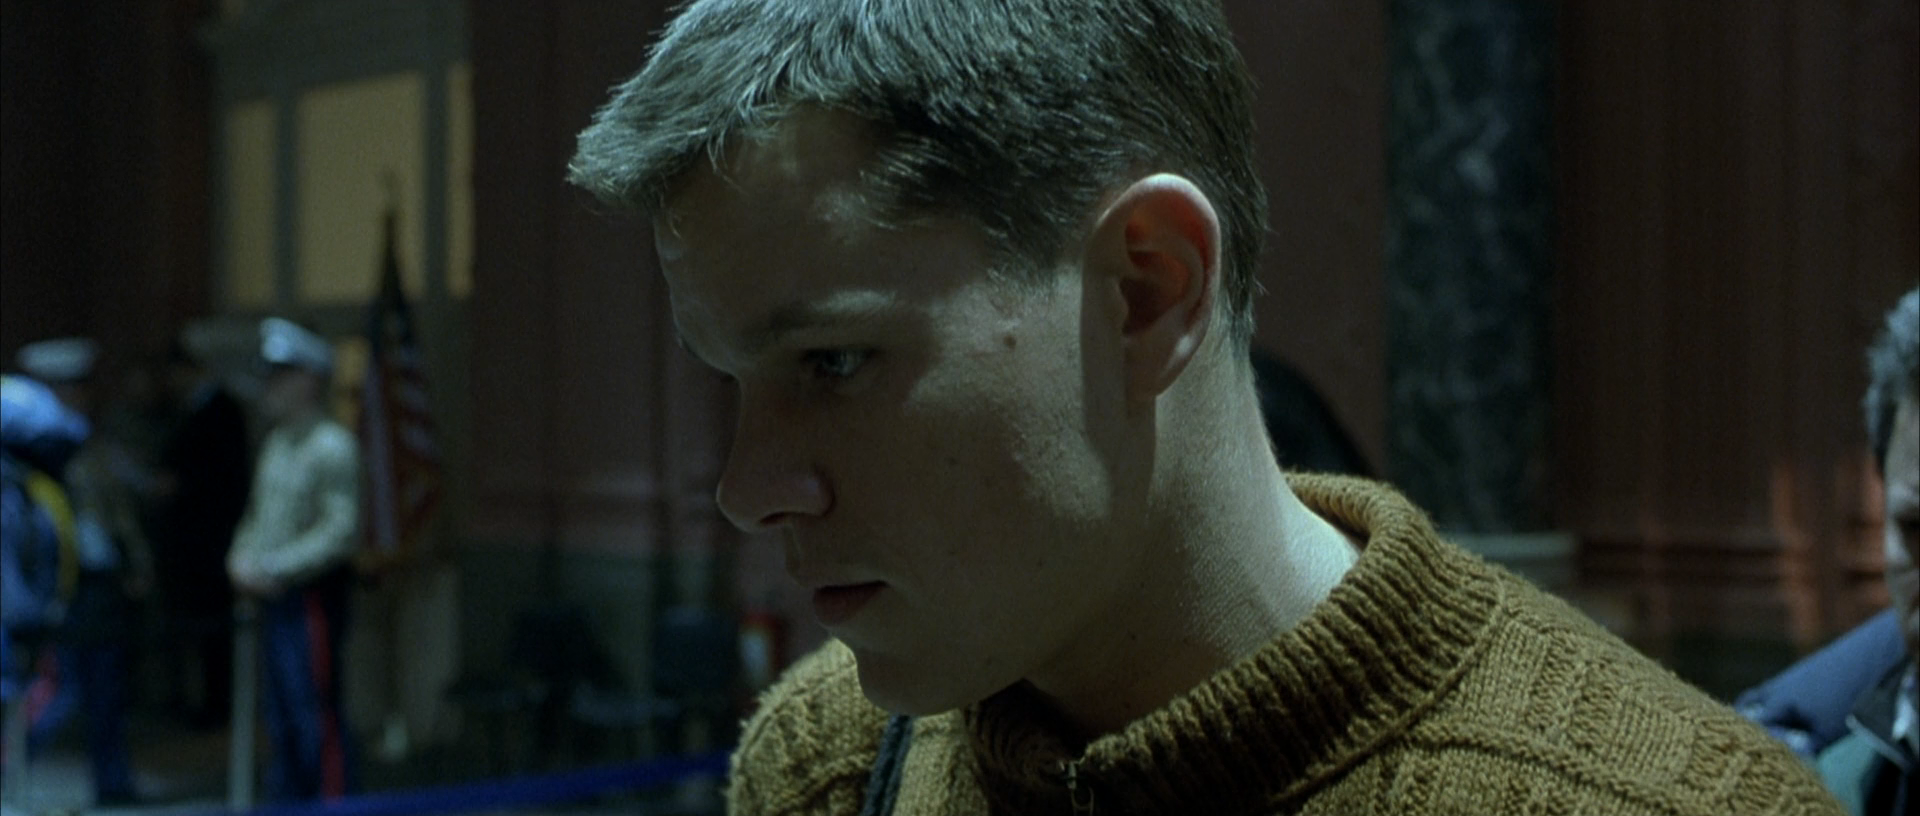 Джейсон Борн (Коллекция) / The Ultimate Bourne: Collection / 2002-2016 / ДБ, АП (Гаврилов), СТ / BDRip (1080p)